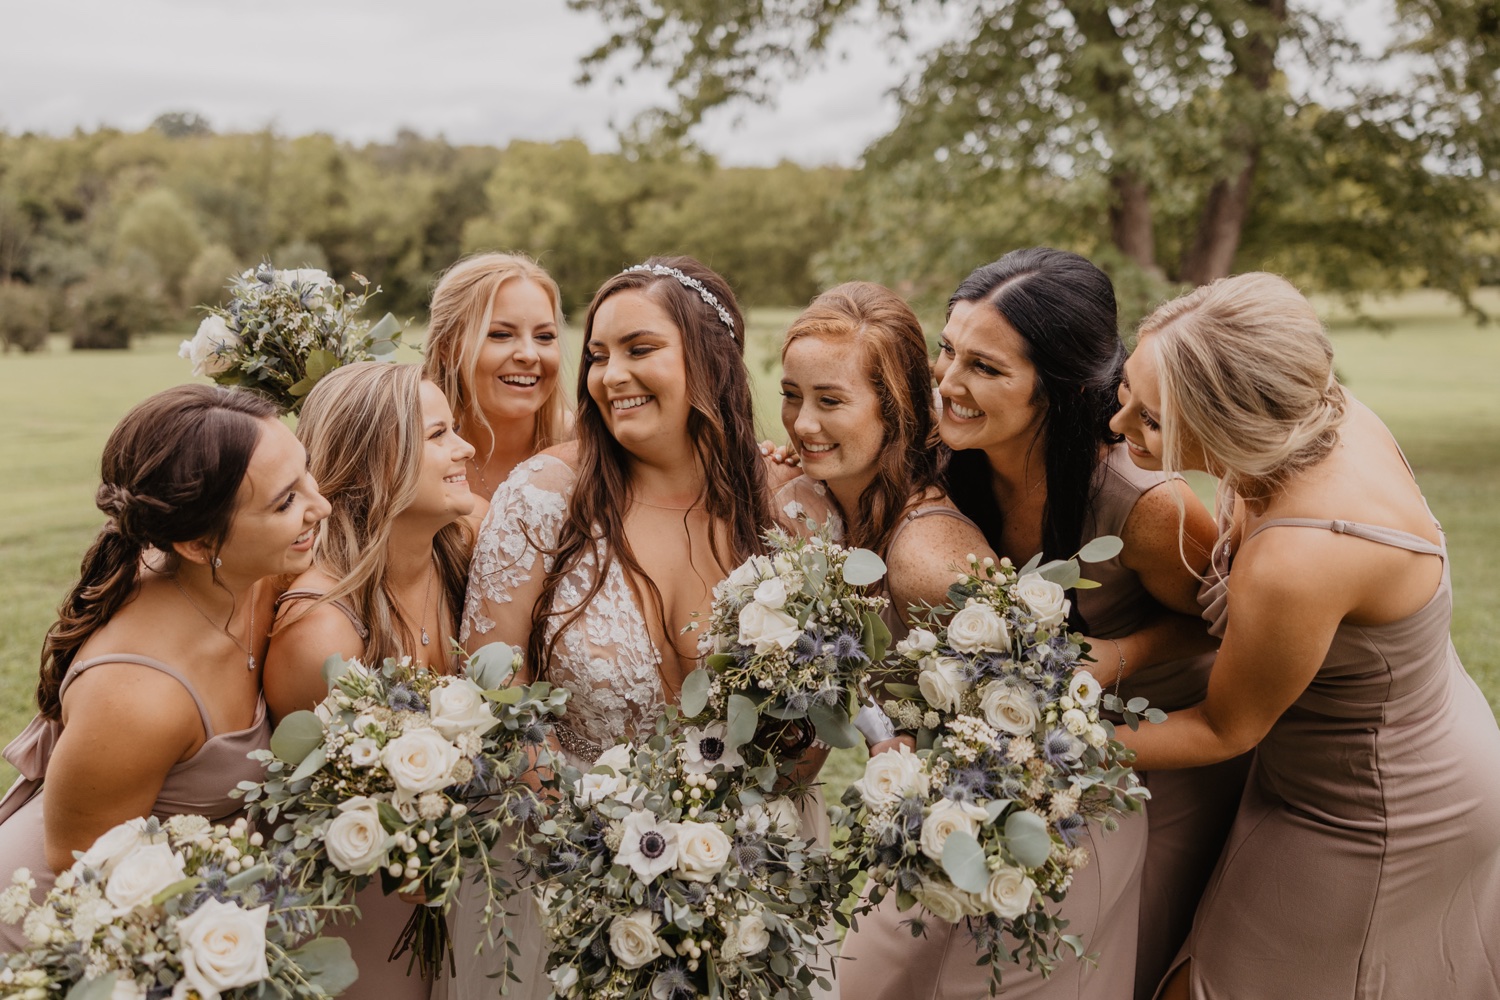 Grace Valley Farm Wedding | Tennessee Wedding Venue